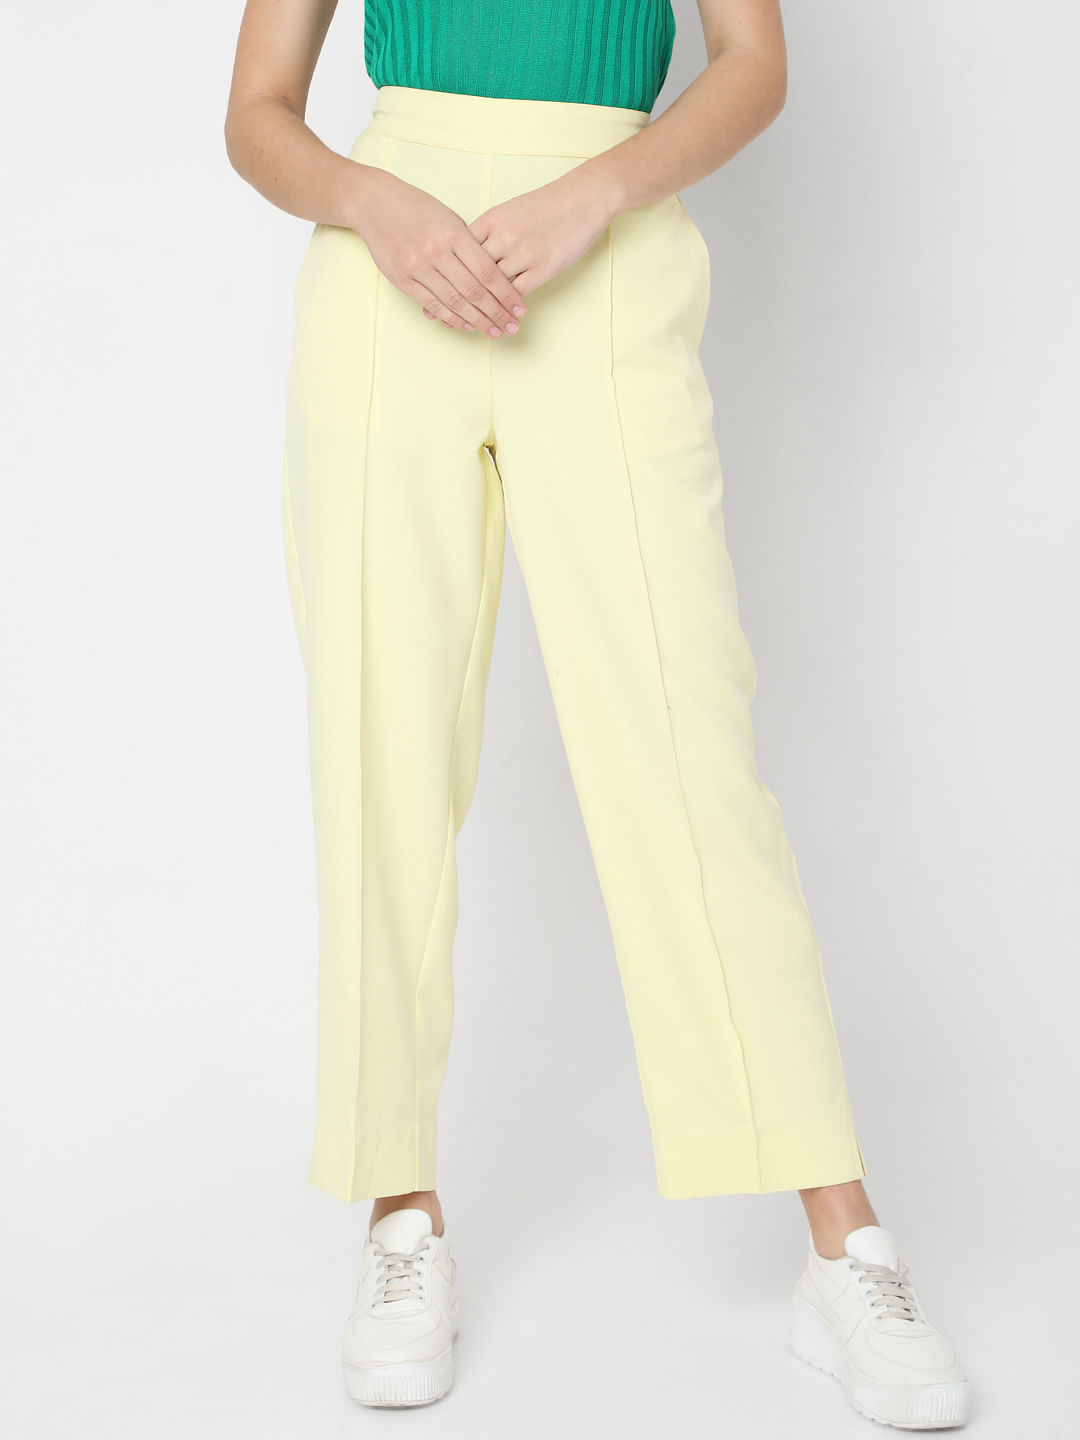 Light Yellow - Garment Dyed Chino | SPIER & MACKAY